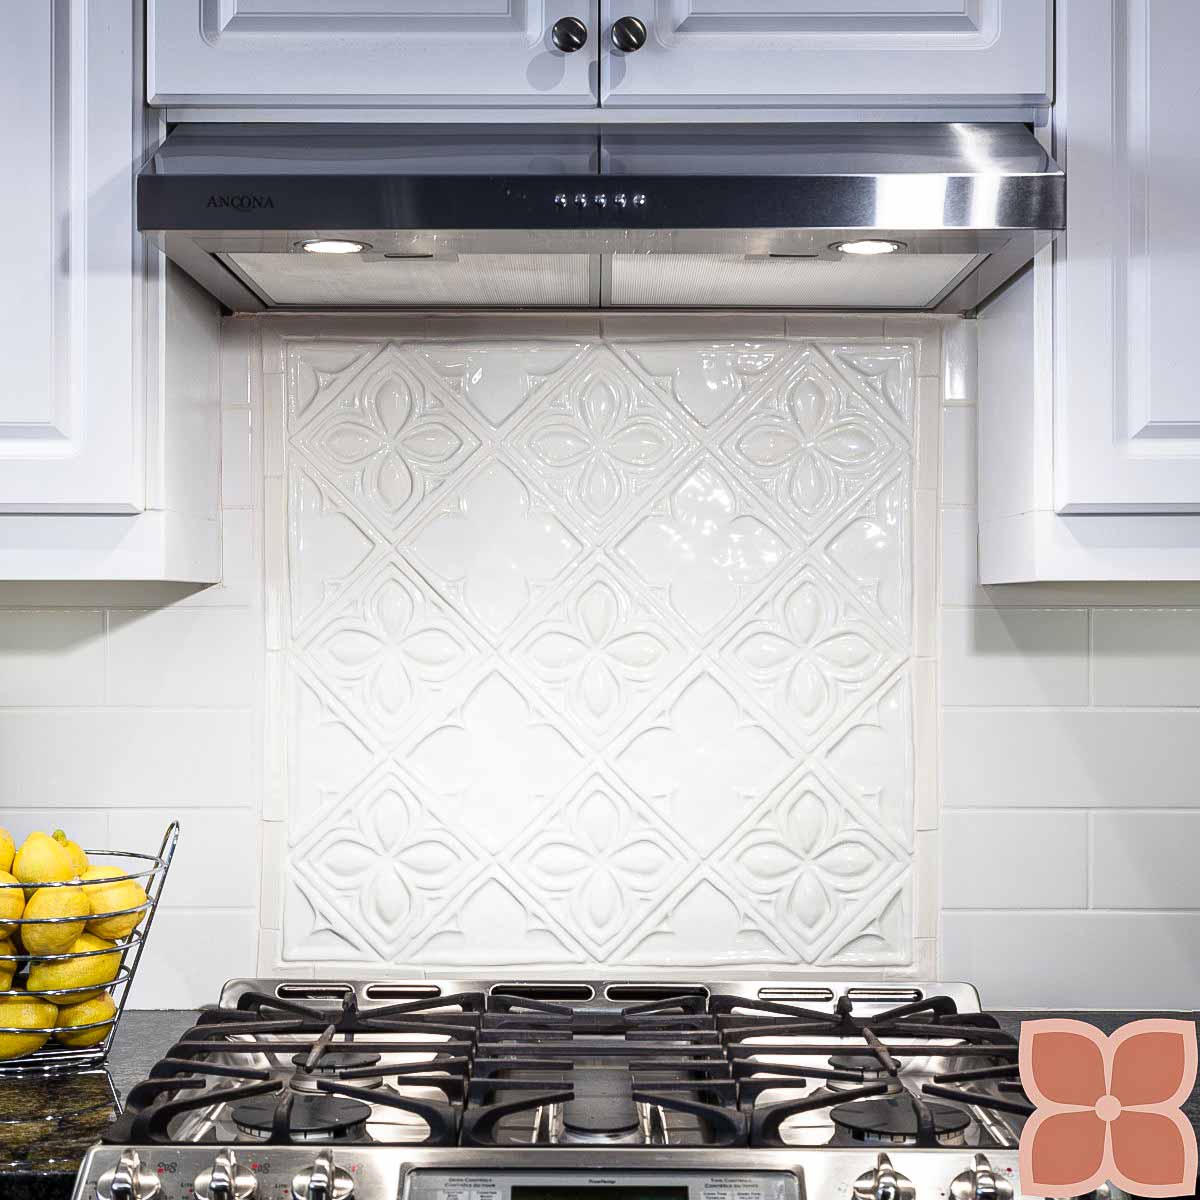 Carlow-white-handmade-decorative-backsplash-kitchen-tiles